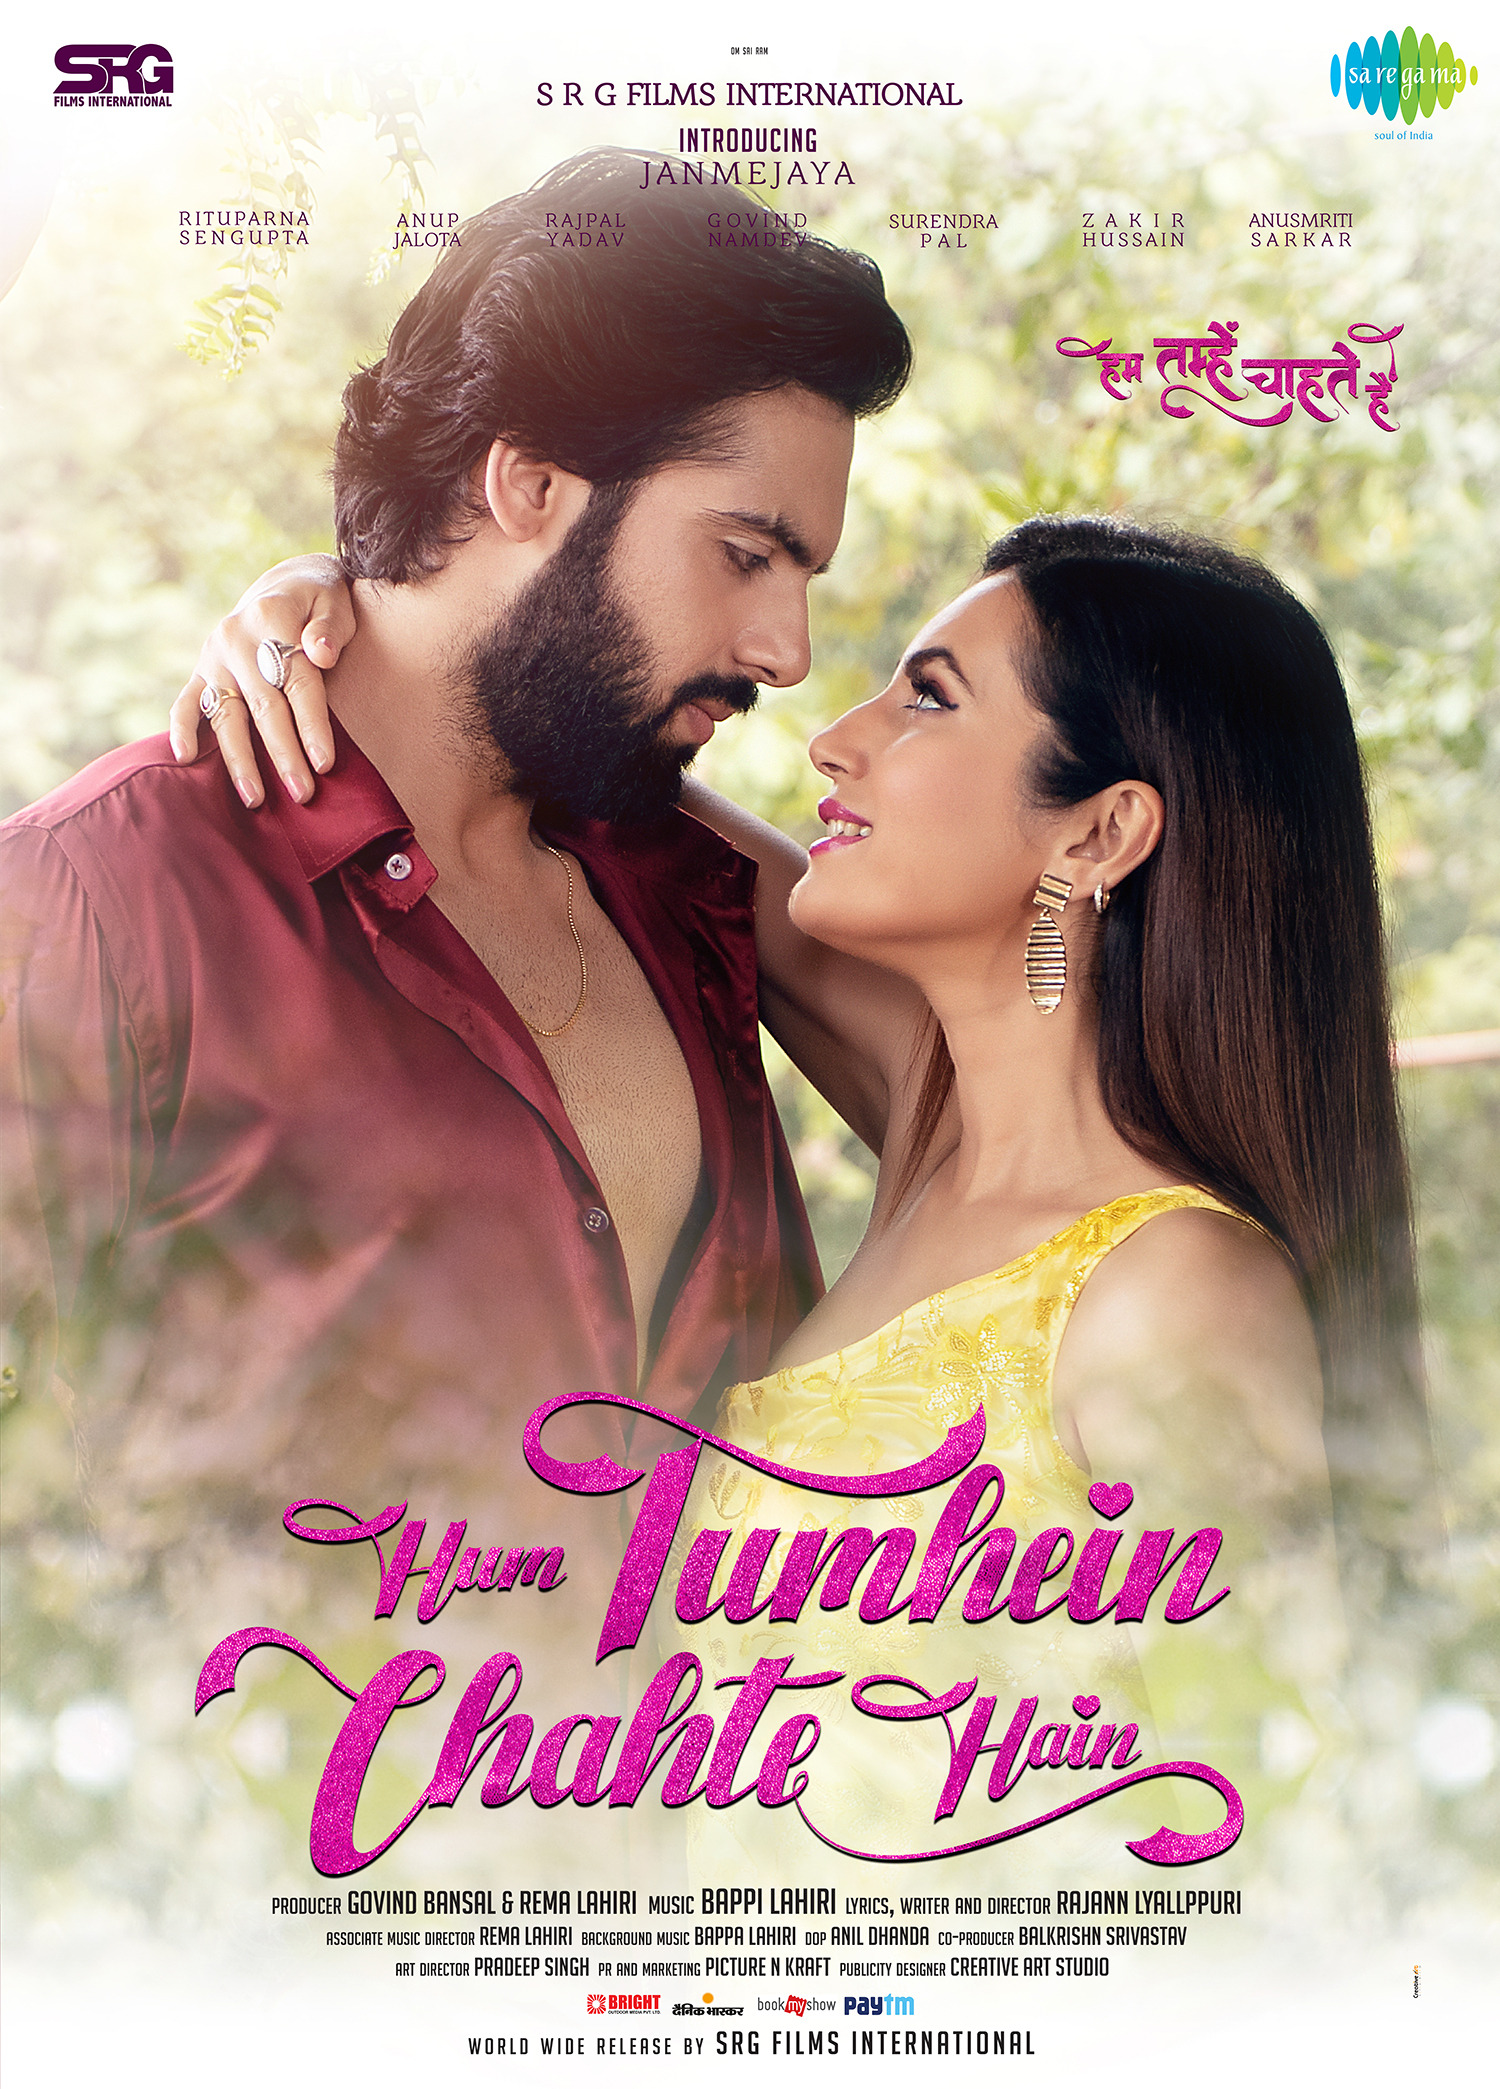 Mega Sized Movie Poster Image for Hum Tumhein Chahte Hain (#4 of 5)